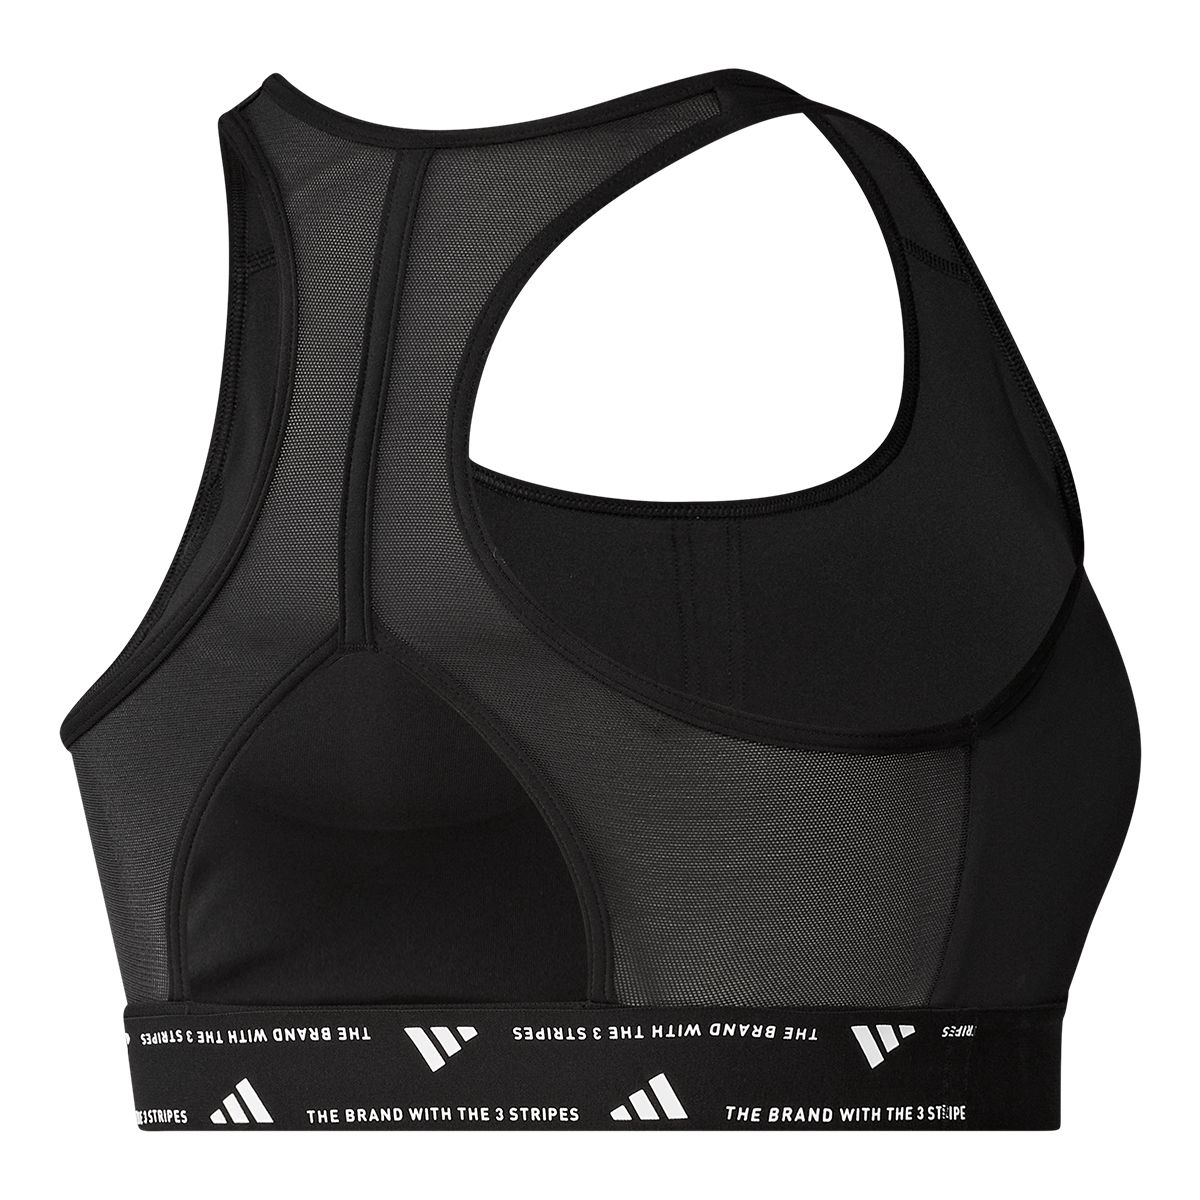 Adidas Graphic White & Black Sports Bra XL model DU1866 Athletic Apparel  Women’s